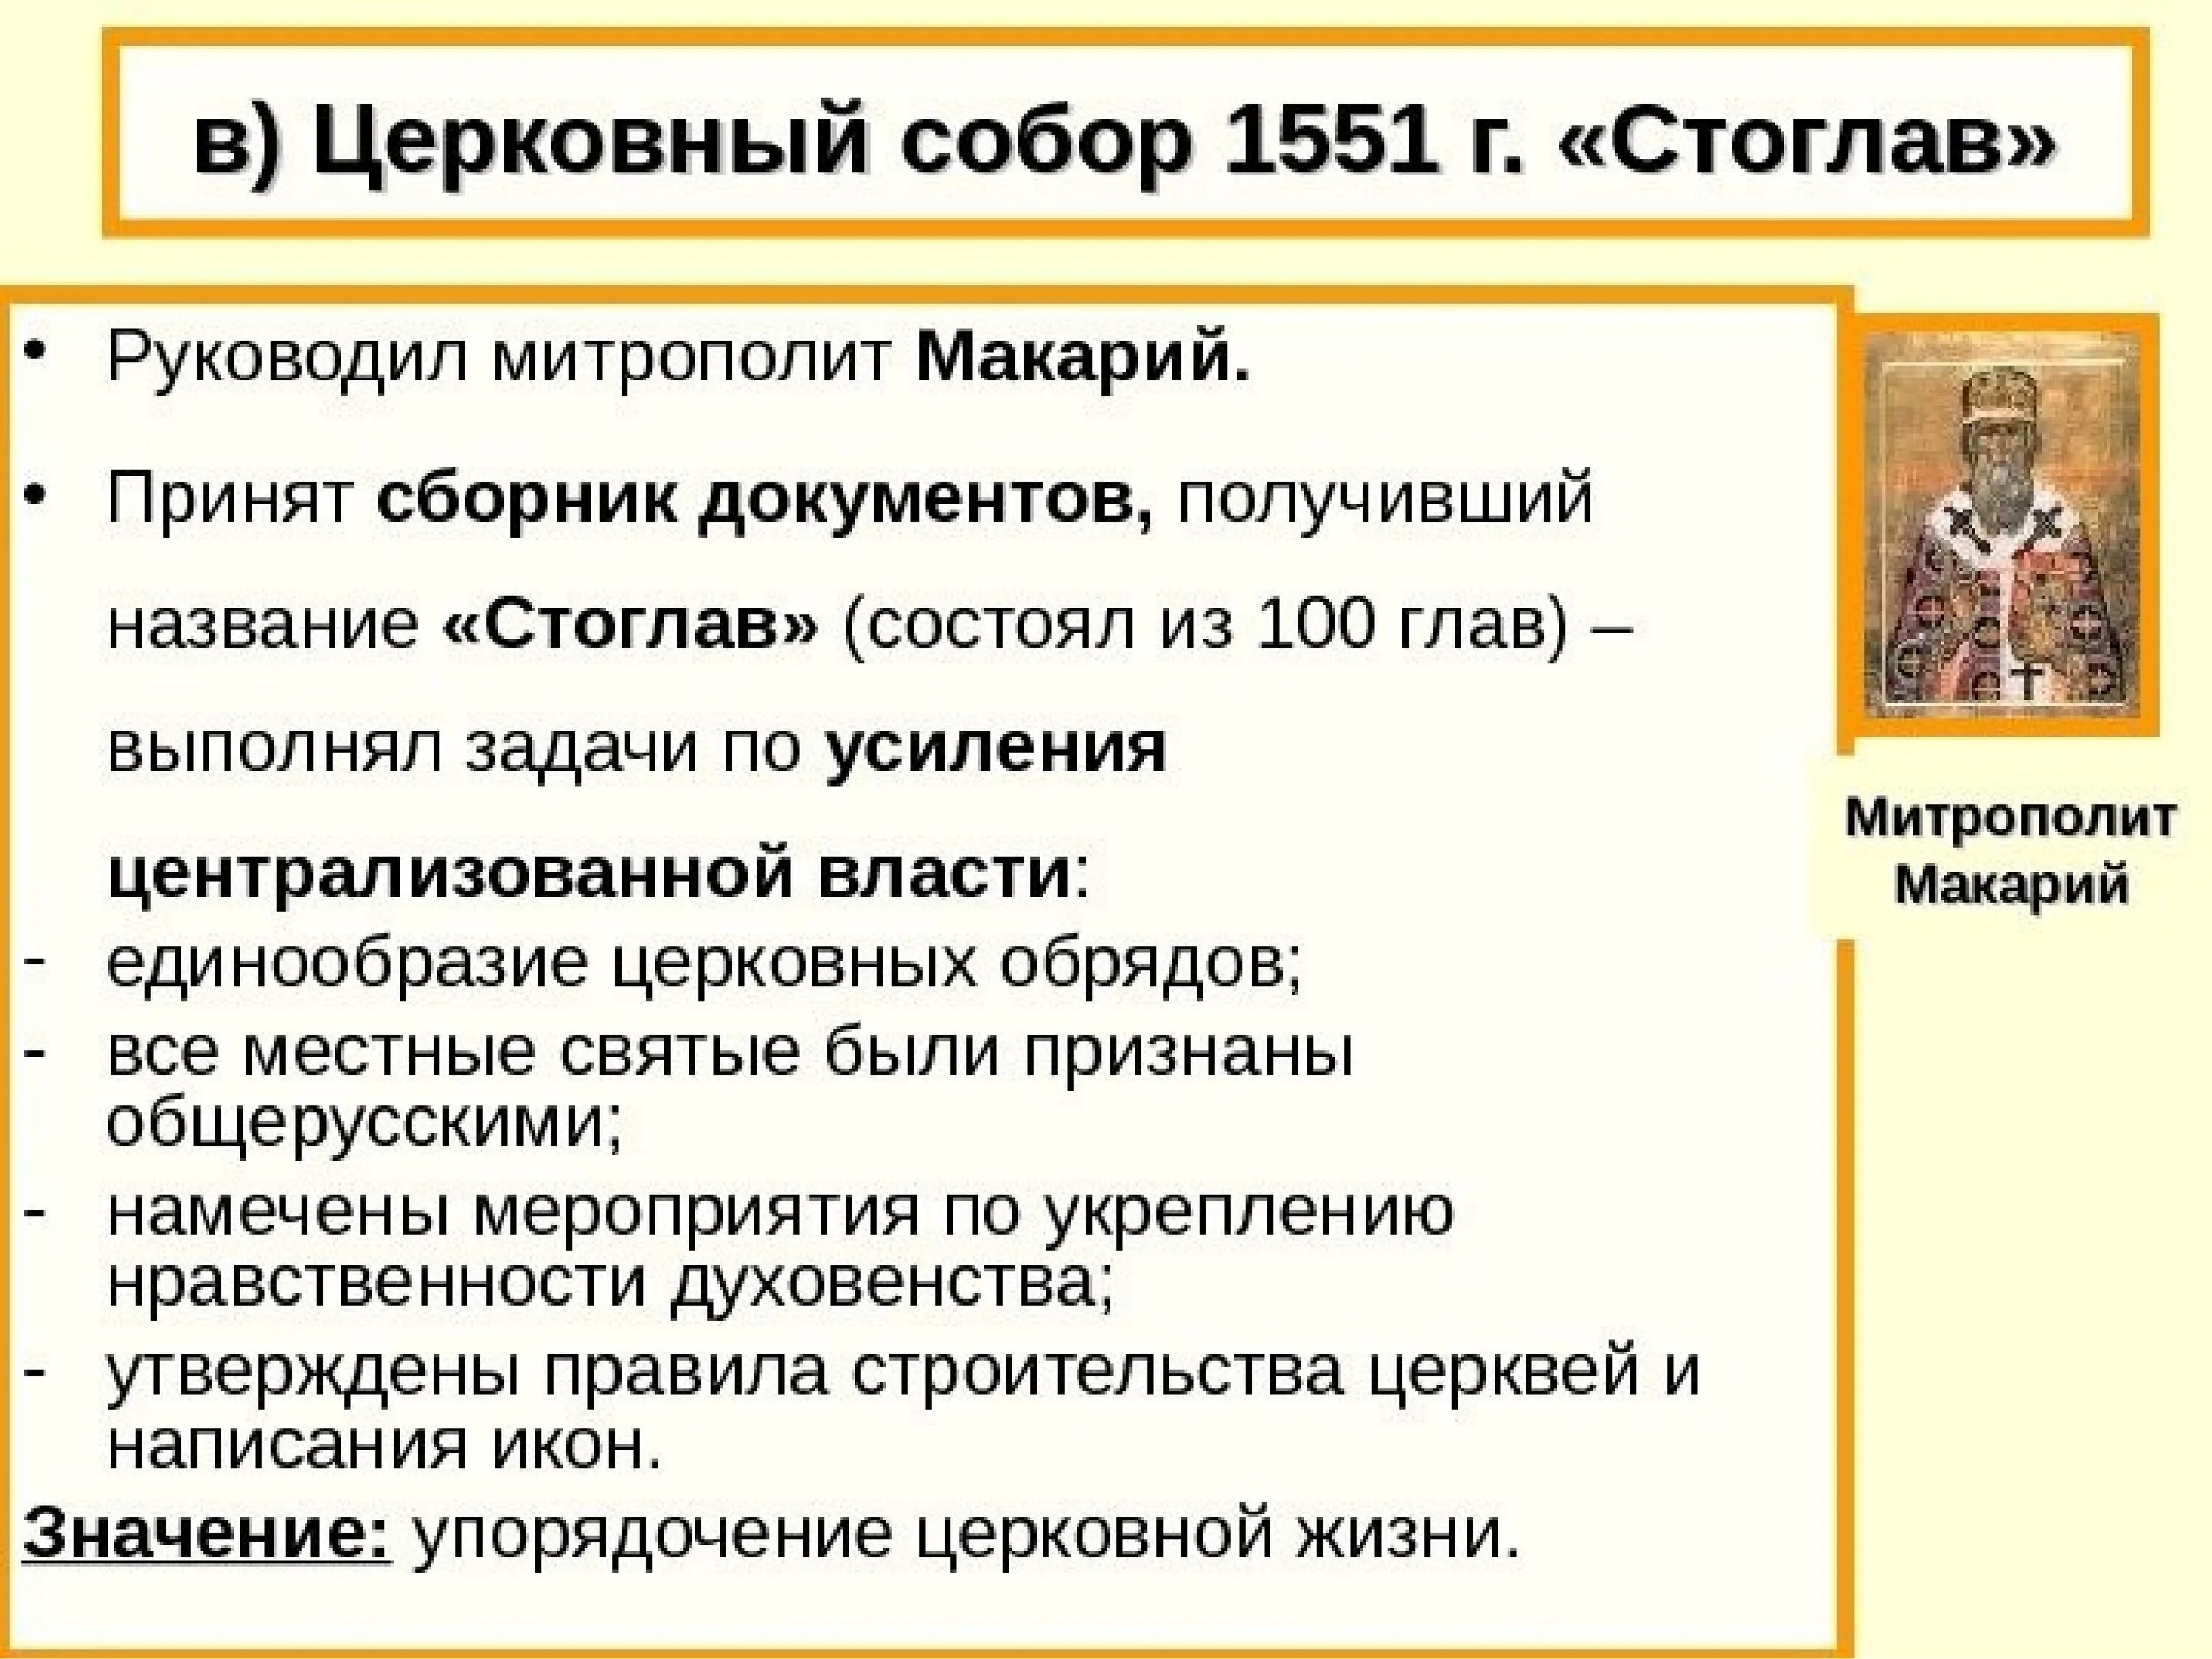 100 Глав Ивана Грозного. Цель Стоглавого собора 1551 года. Церковная реформа грозного